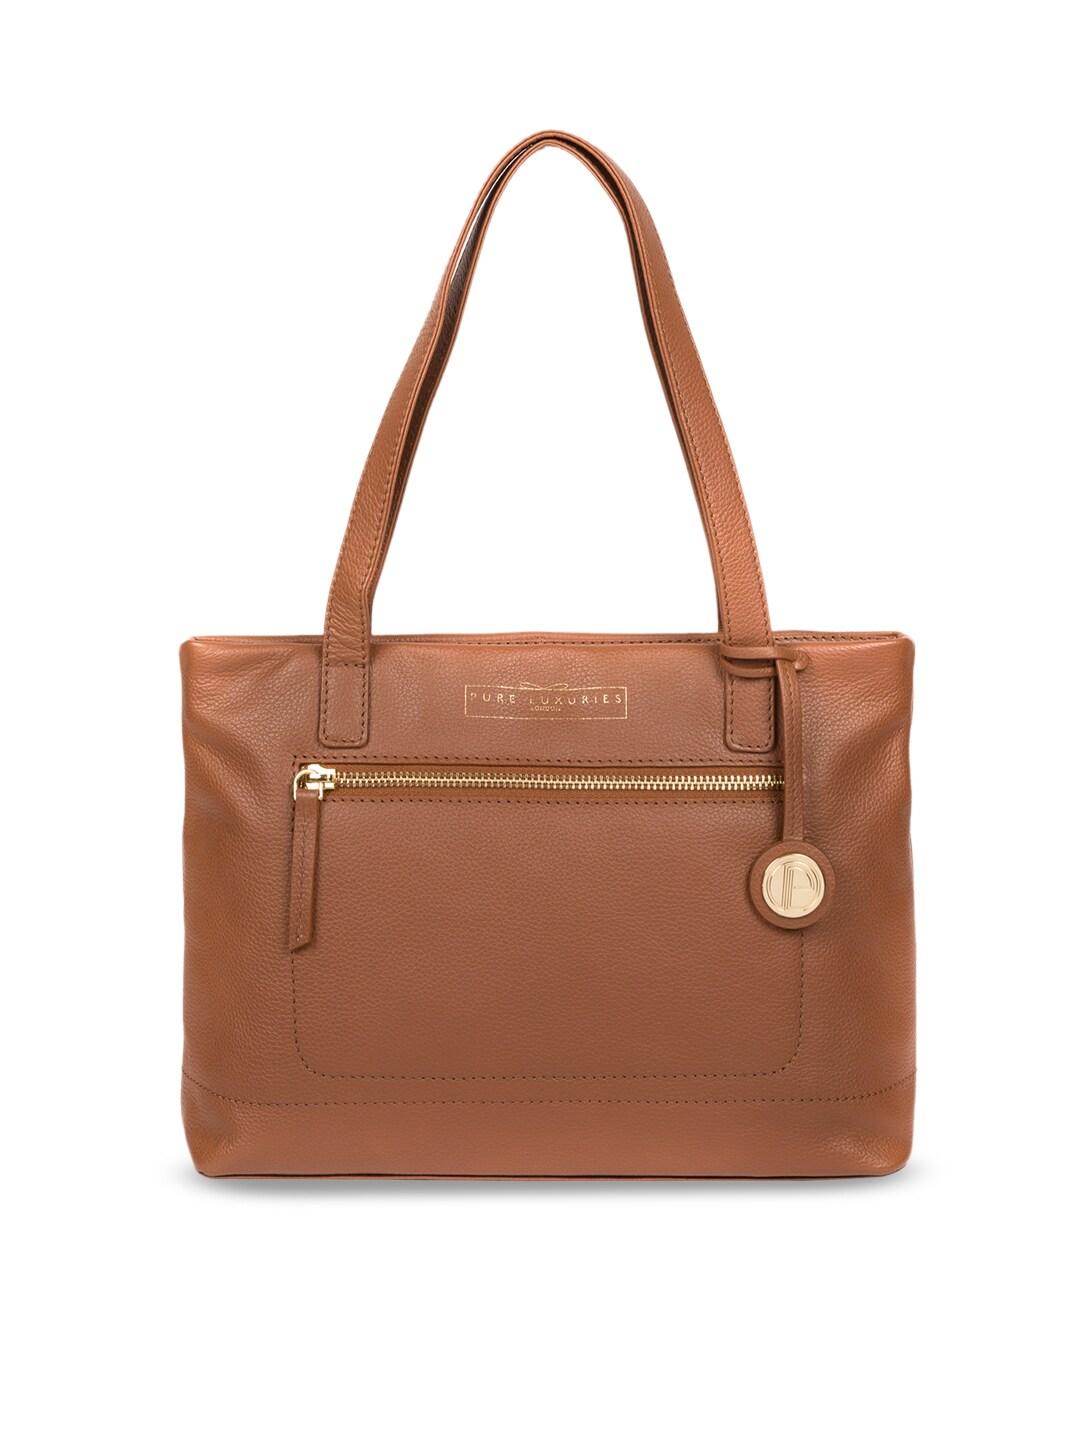 PURE LUXURIES LONDON Women Tan Brown Solid Genuine Leather Adley Shoulder Bag